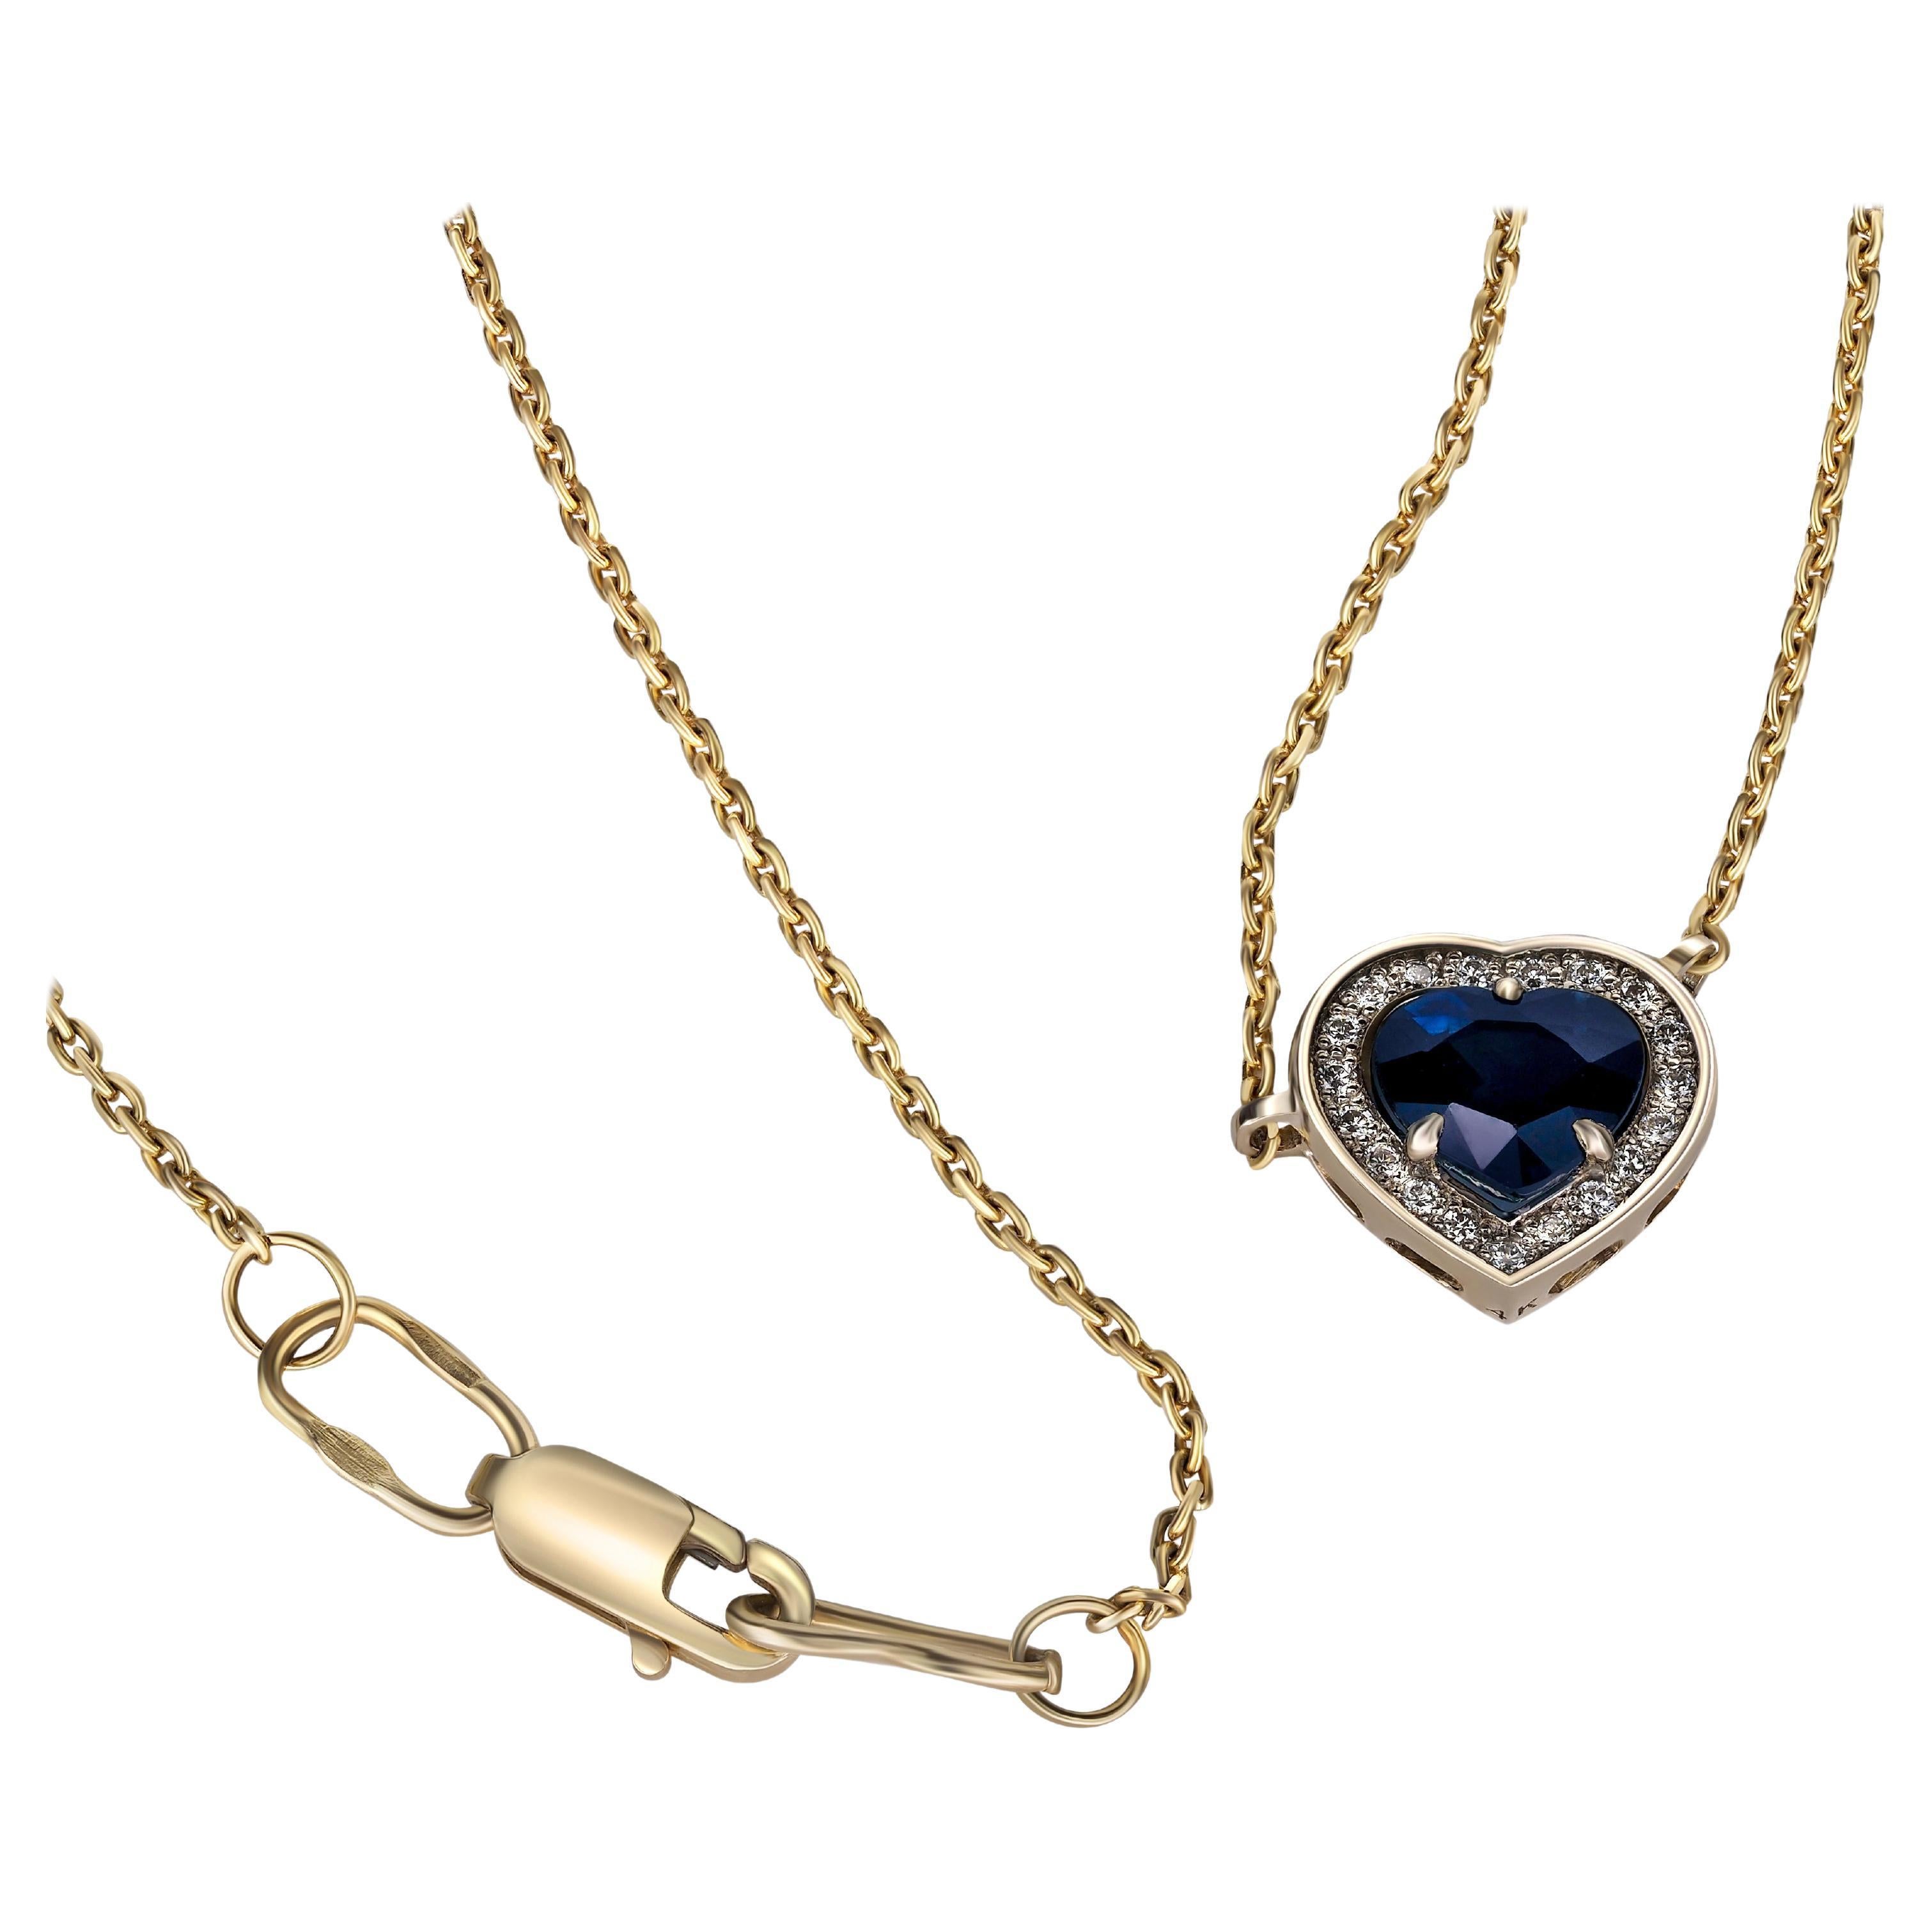 Sapphire Necklace Pendant in 14 Karat Gold, Certified Heart Sapphire Pendant